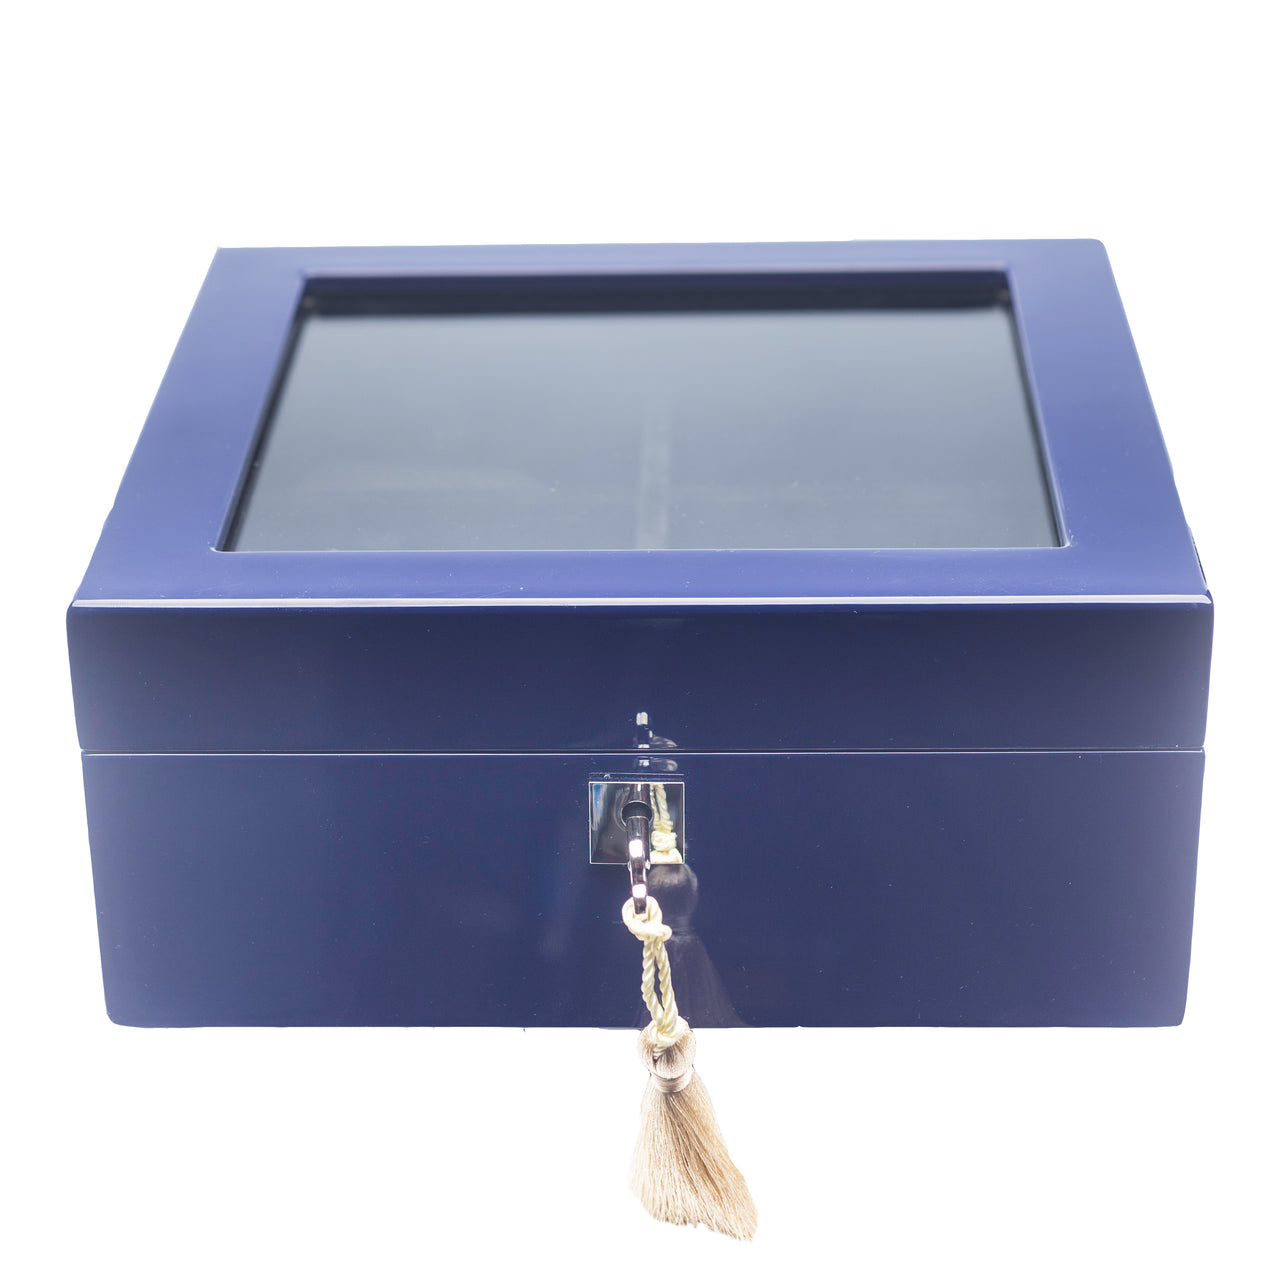 Blue Lacquer 6-Slot Watch Box